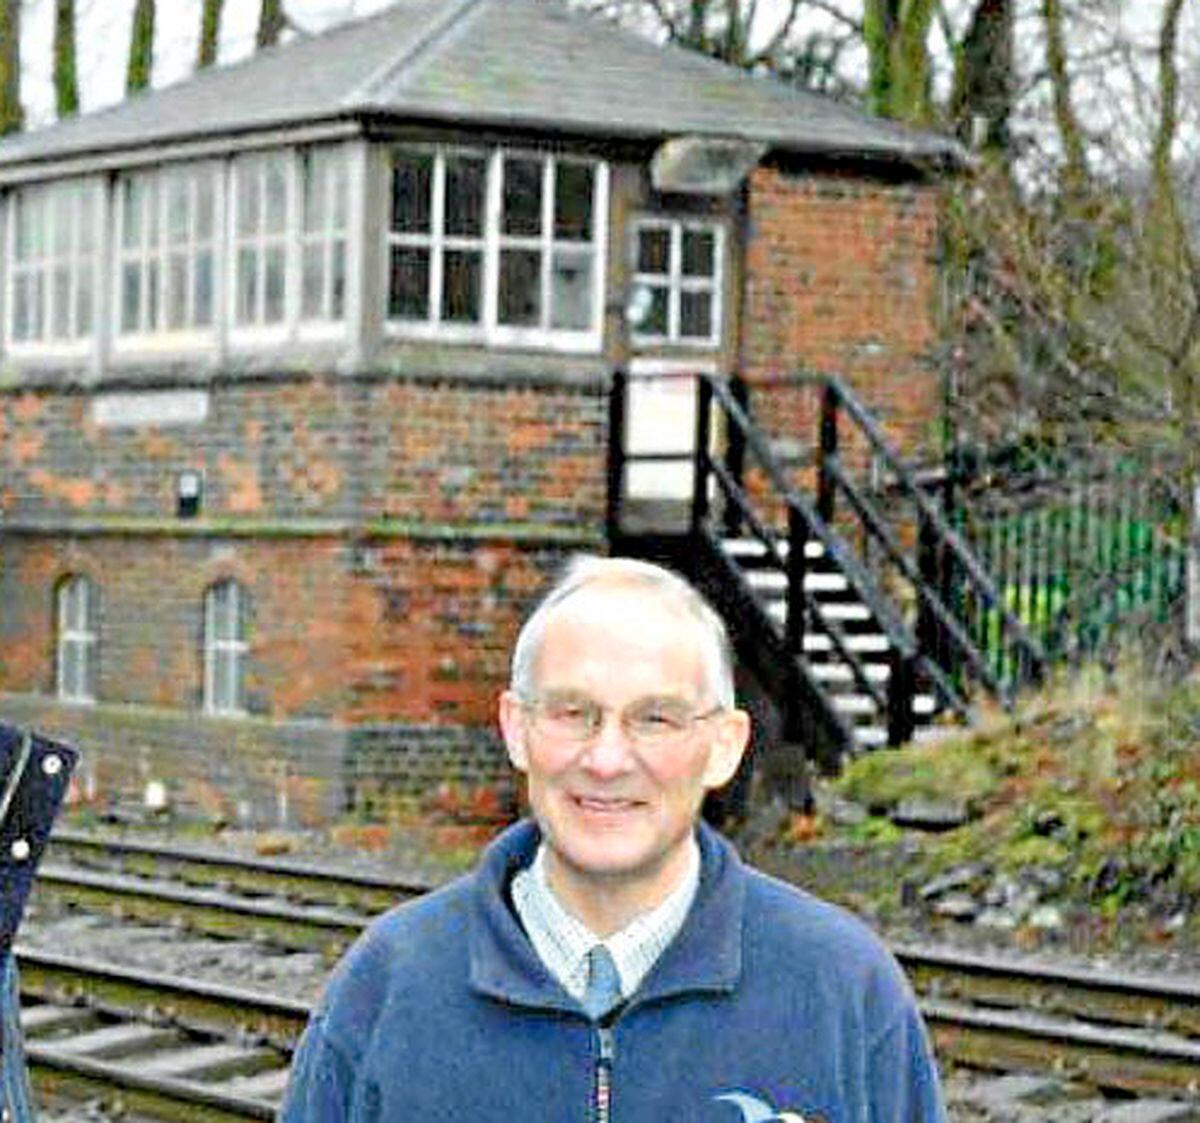 Ian Dormor by the Church Stretton signal box shortly before its demolition